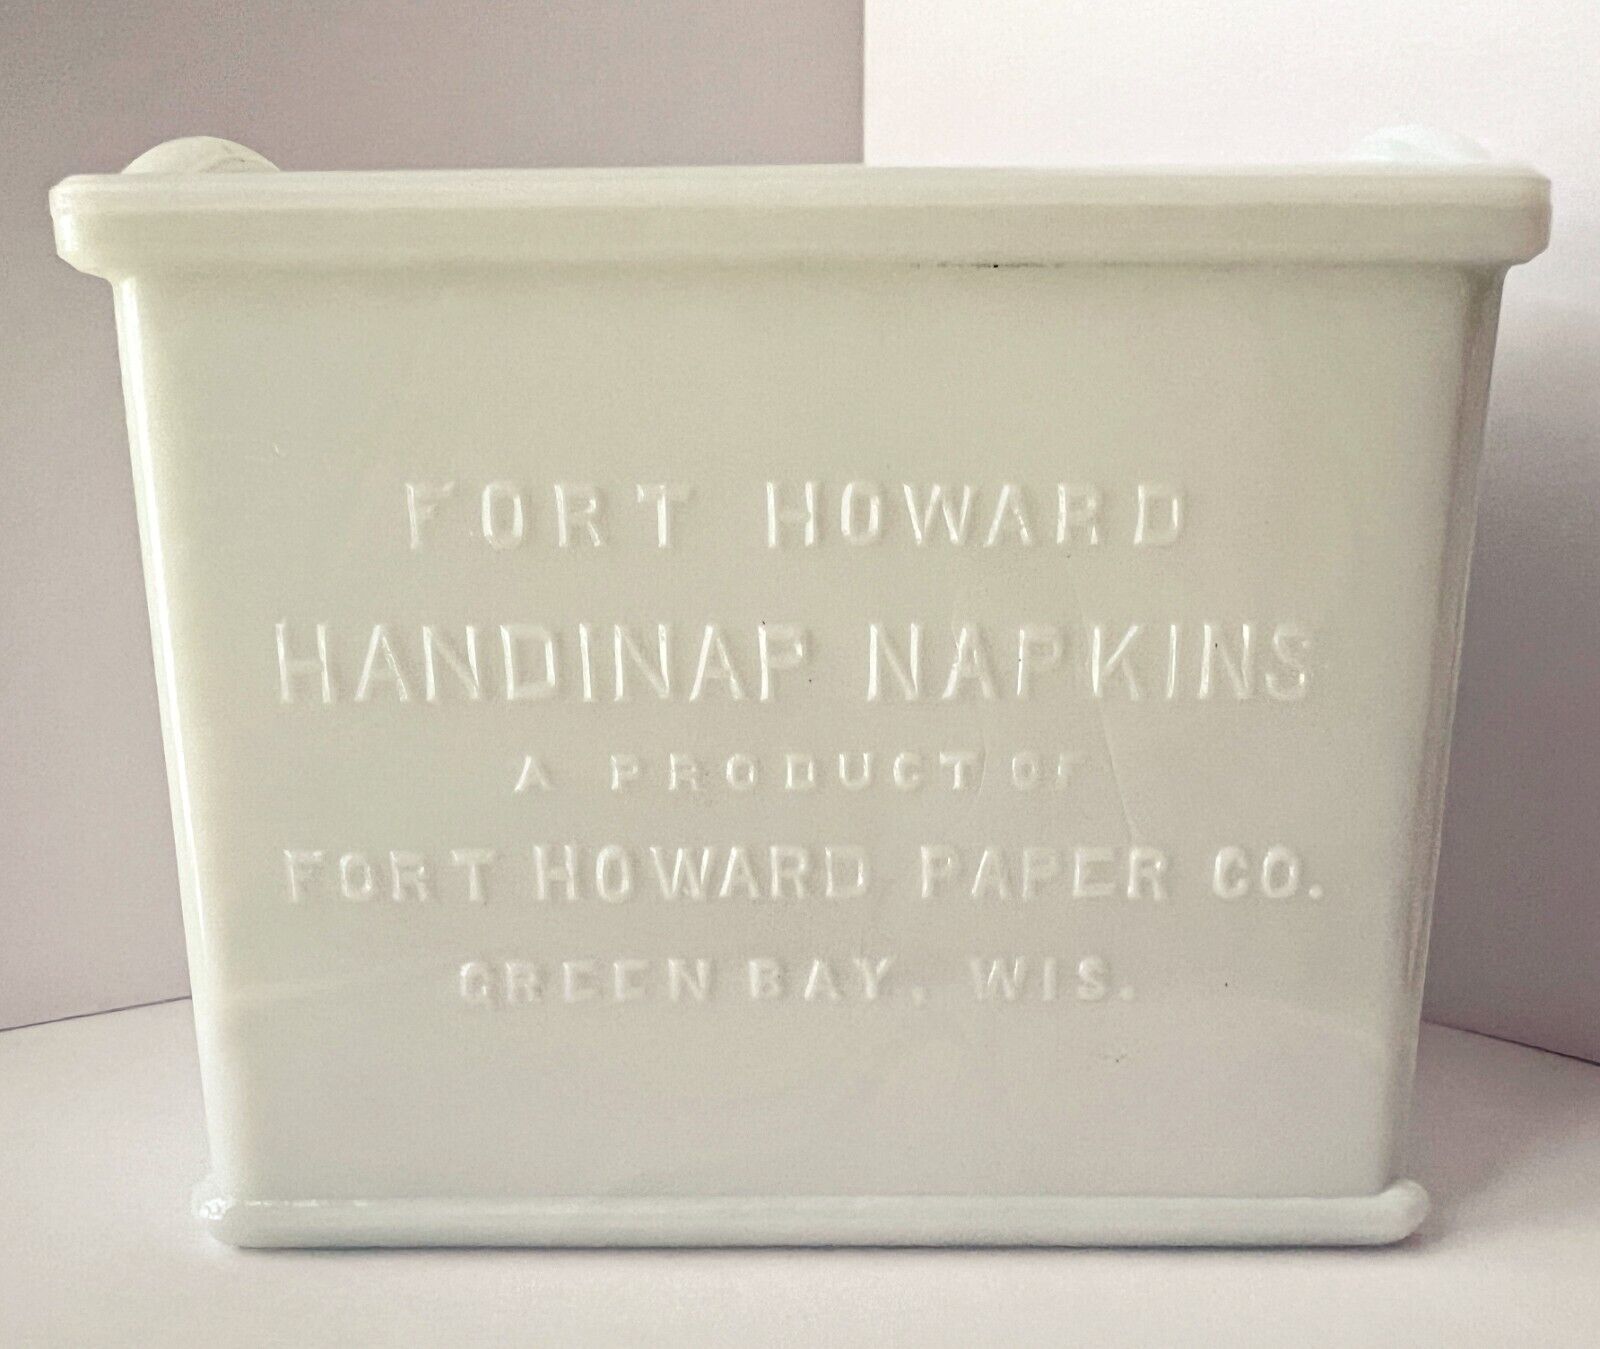 HTF Vintage Milk Glass 1930s Fort Howard Handinap Napkin Holder Green Bay Advert